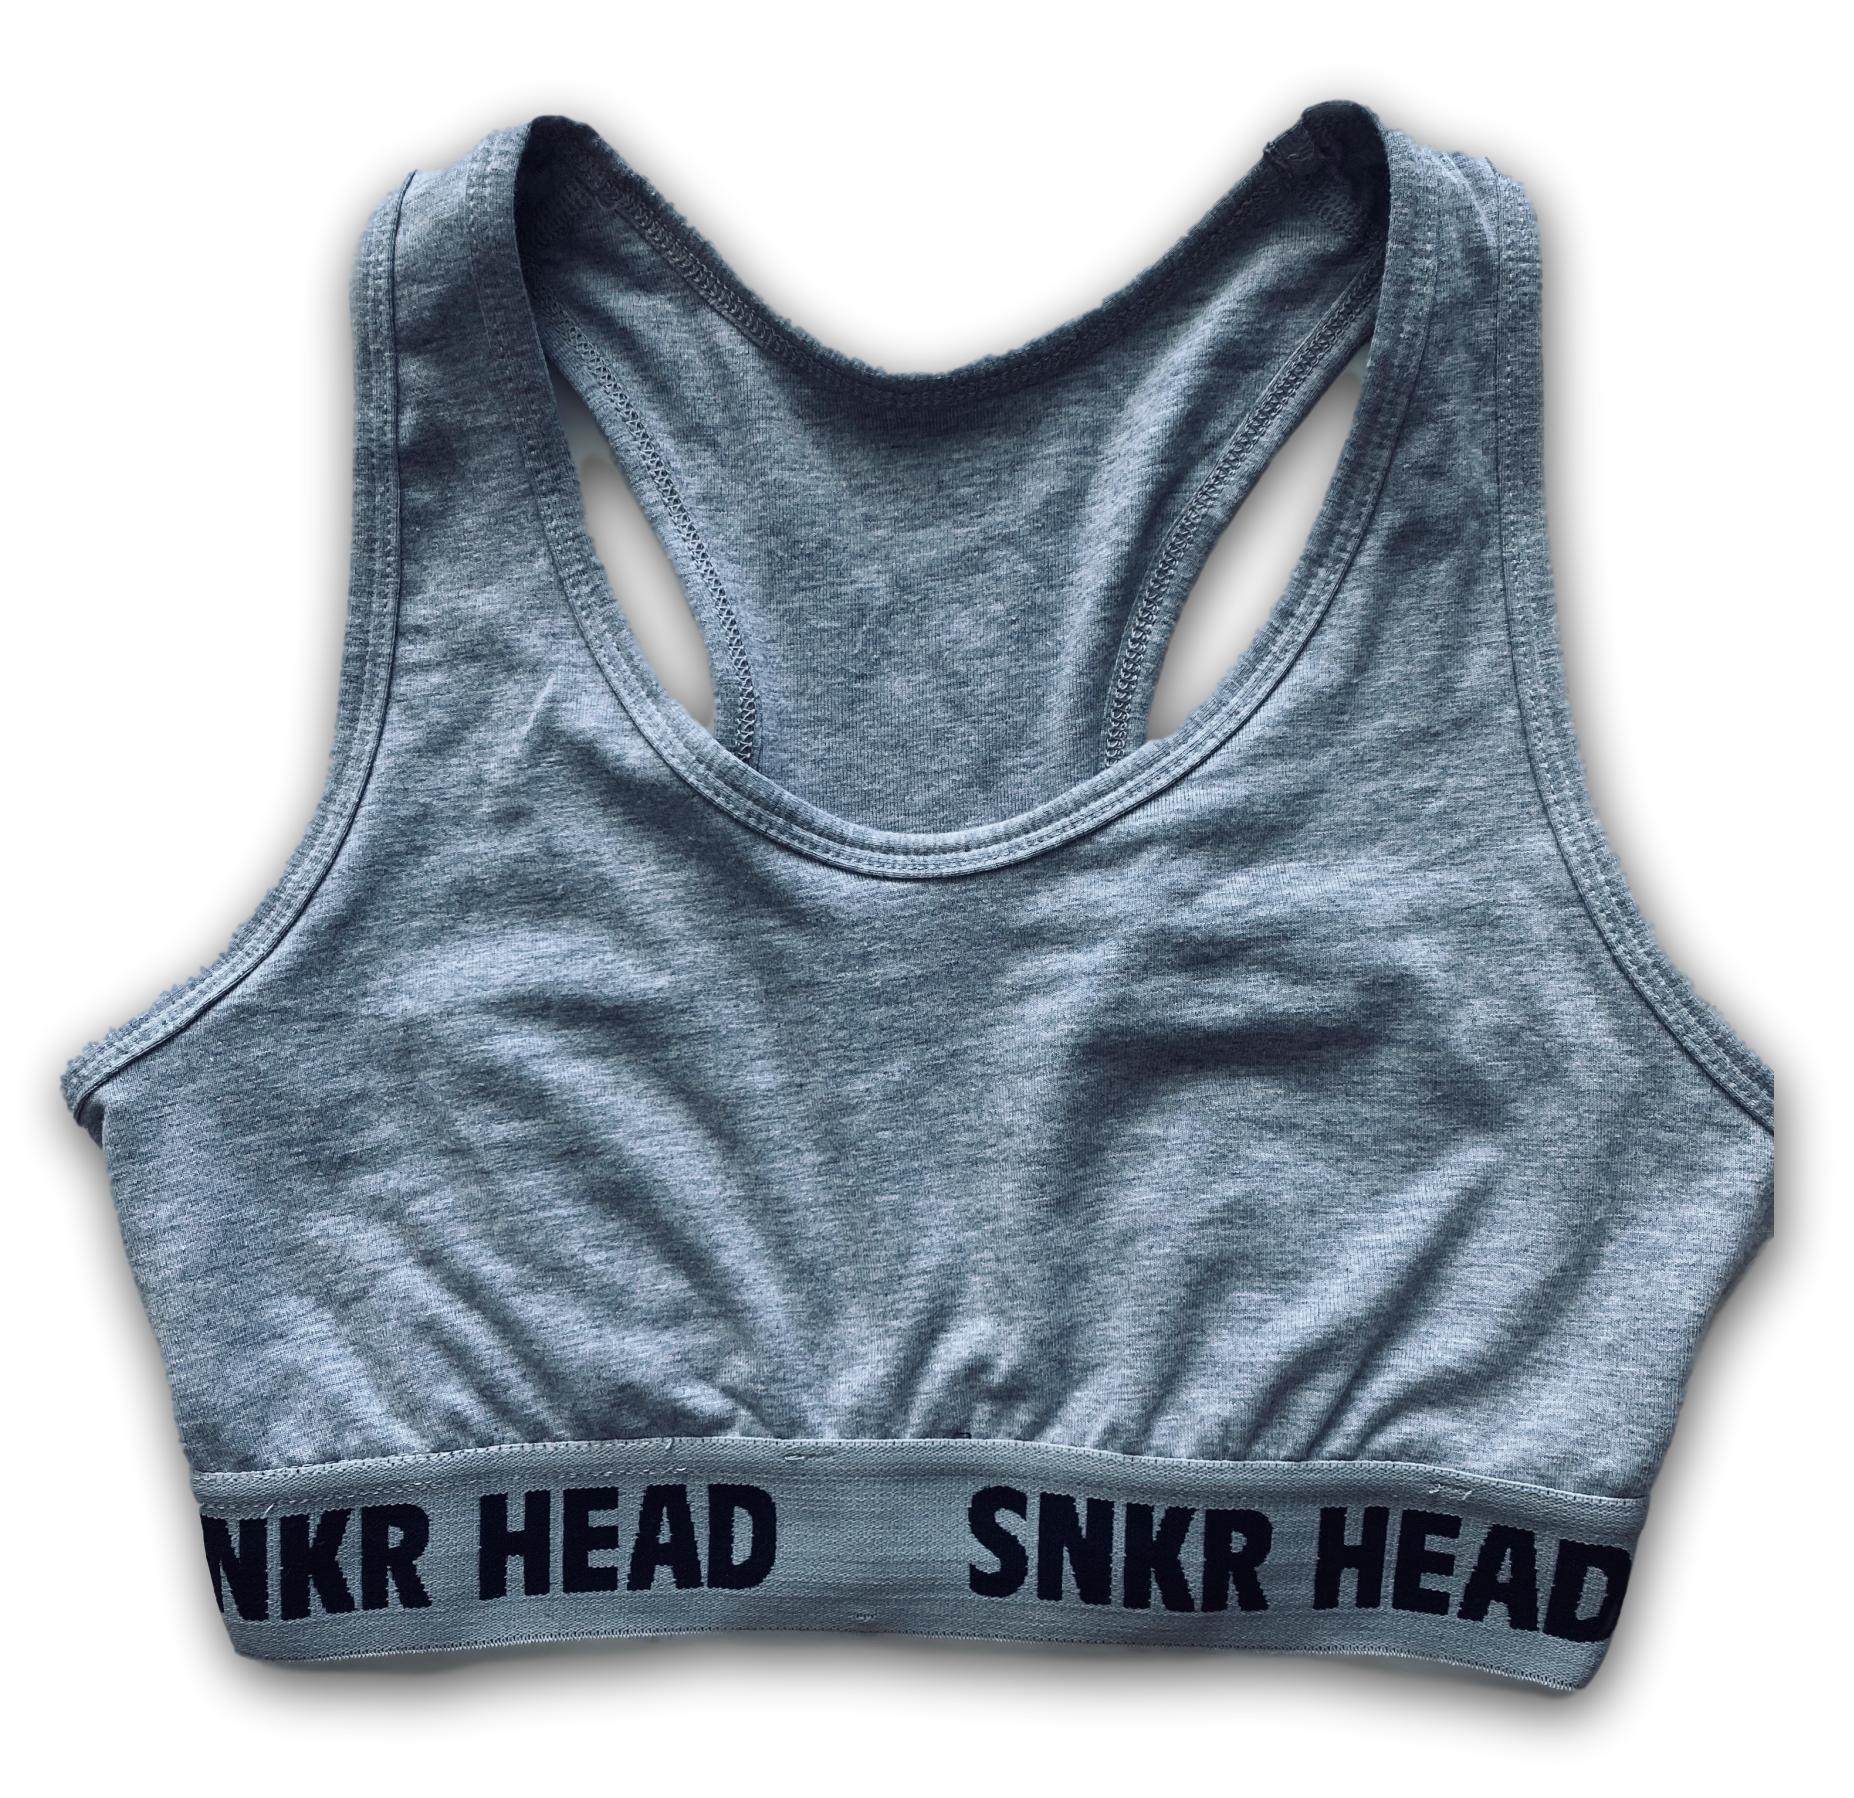 SNKR HEAD Grey Sports Bra & Thong Set